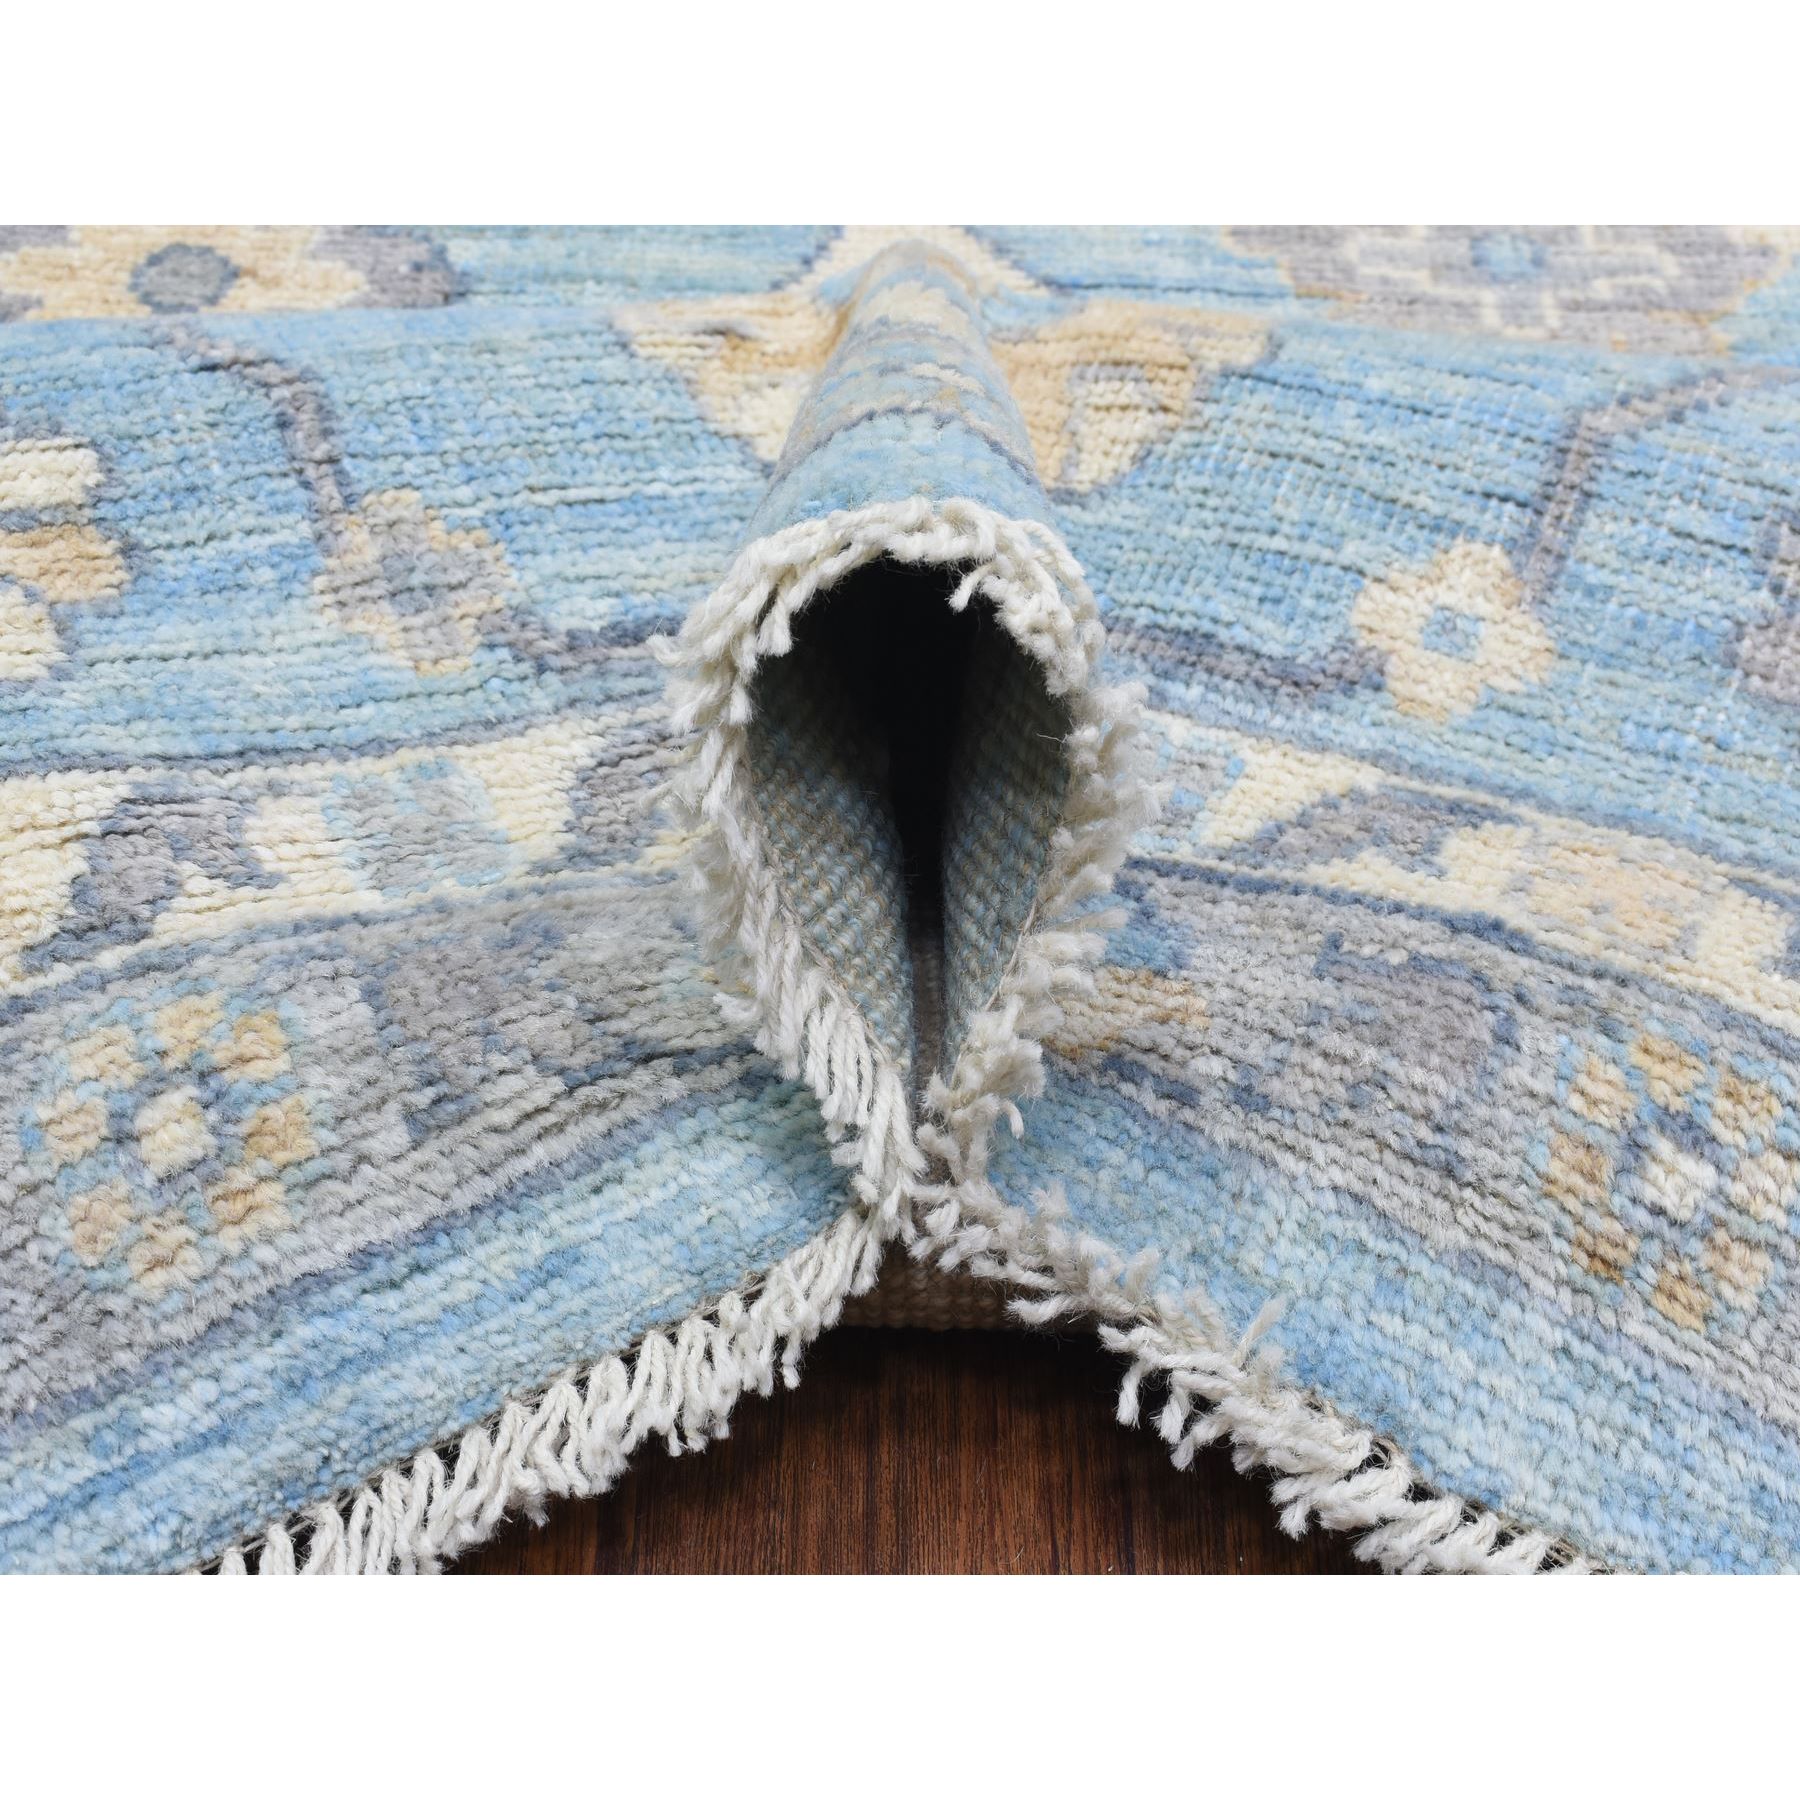 9'3"x12' Light Blue, Afghan Angora Oushak Natural Dyes, Soft Organic Wool Hand Woven, Oriental Rug 